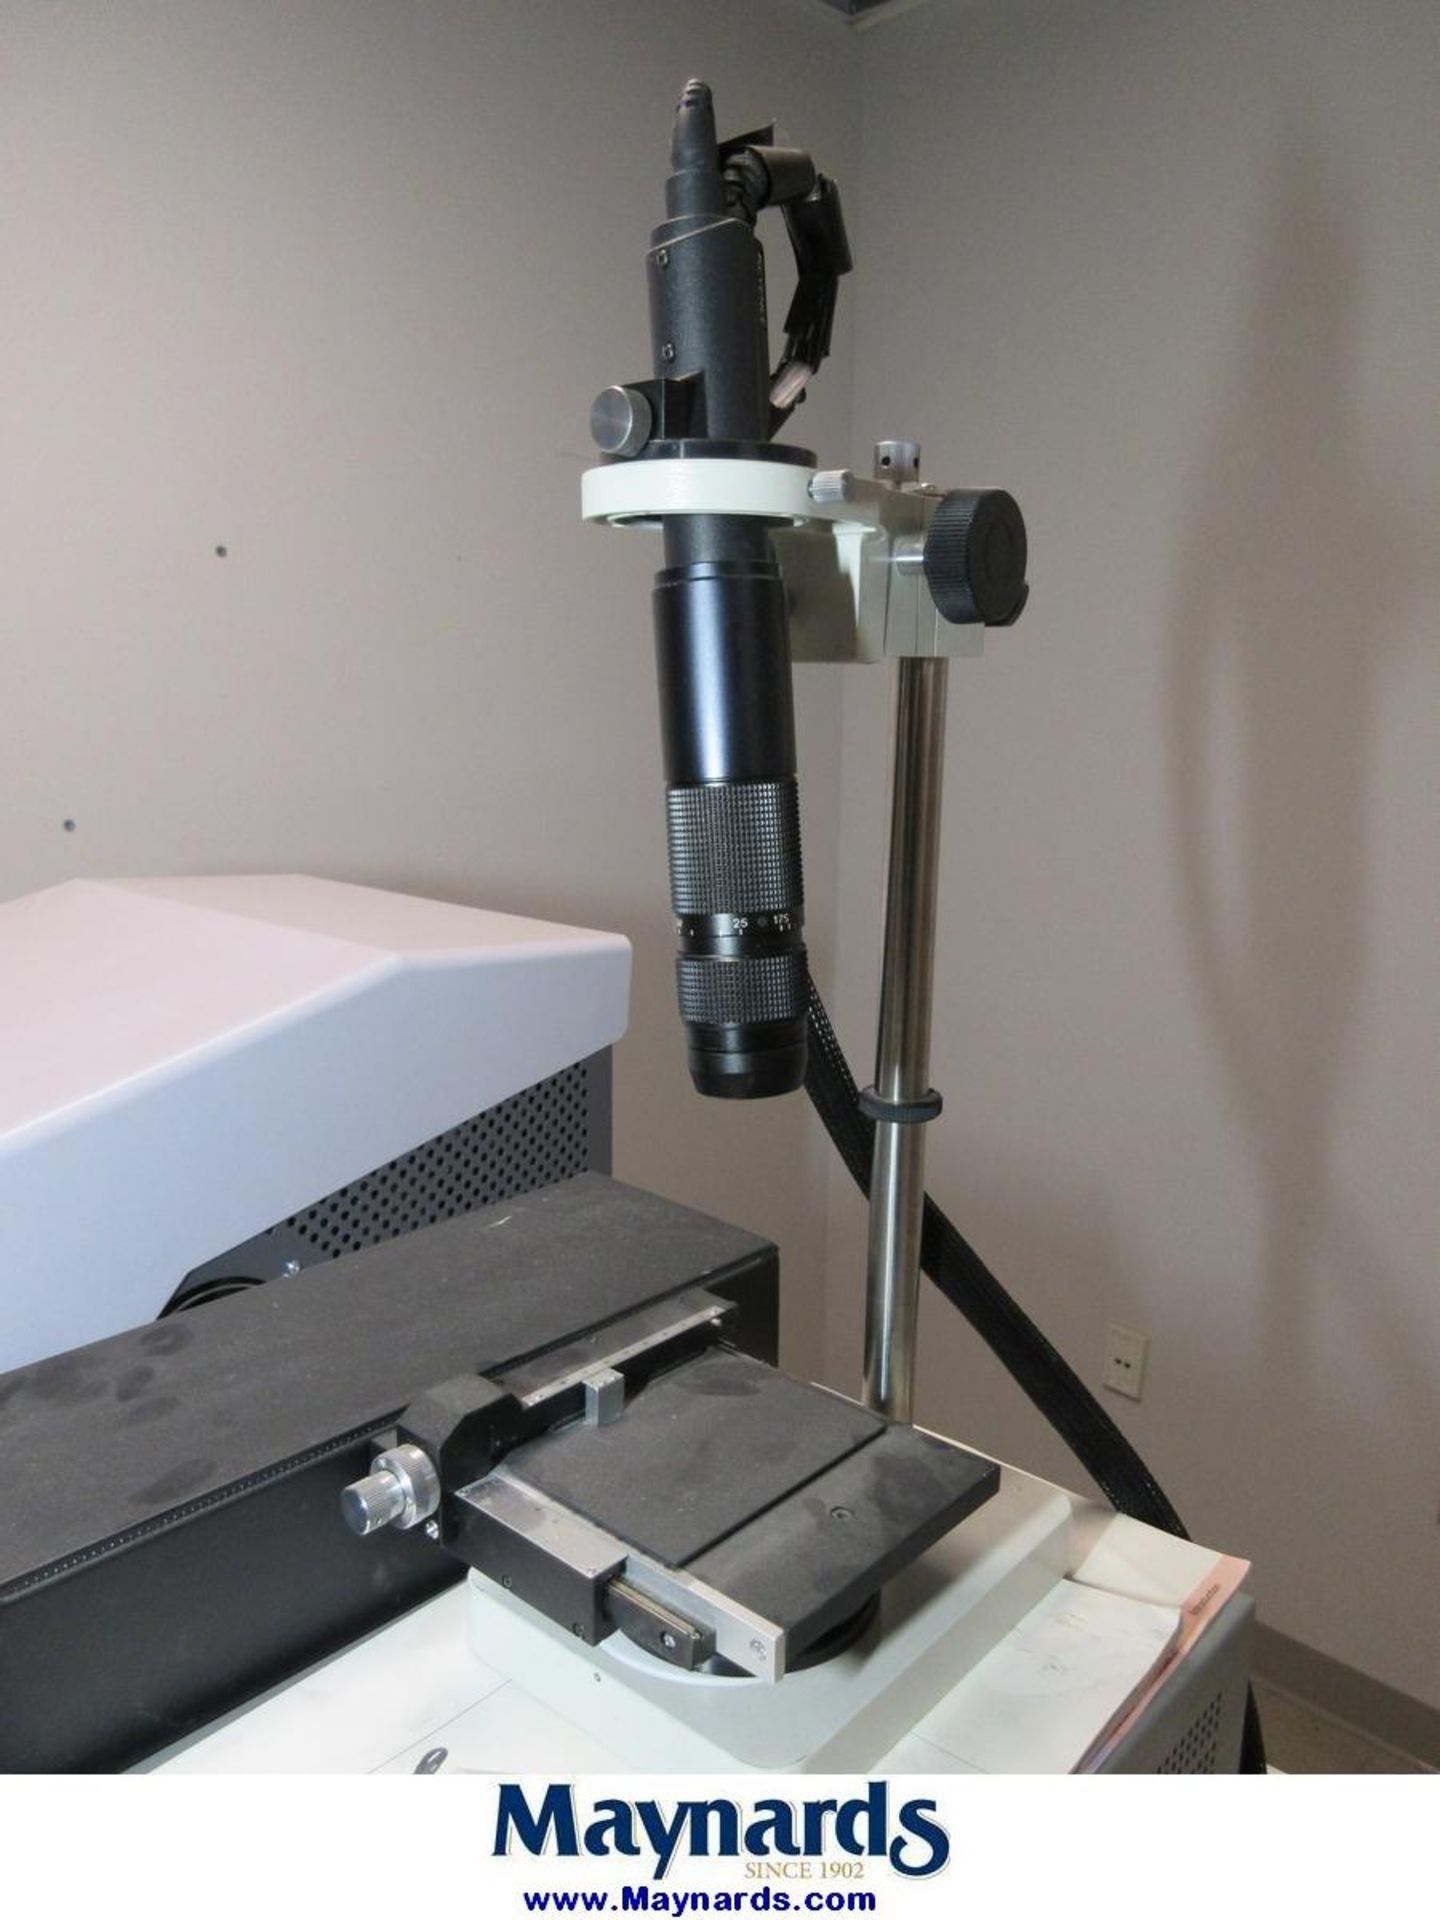 Keyence VH-6300 High-Resolution Digital Microscope - Image 5 of 8